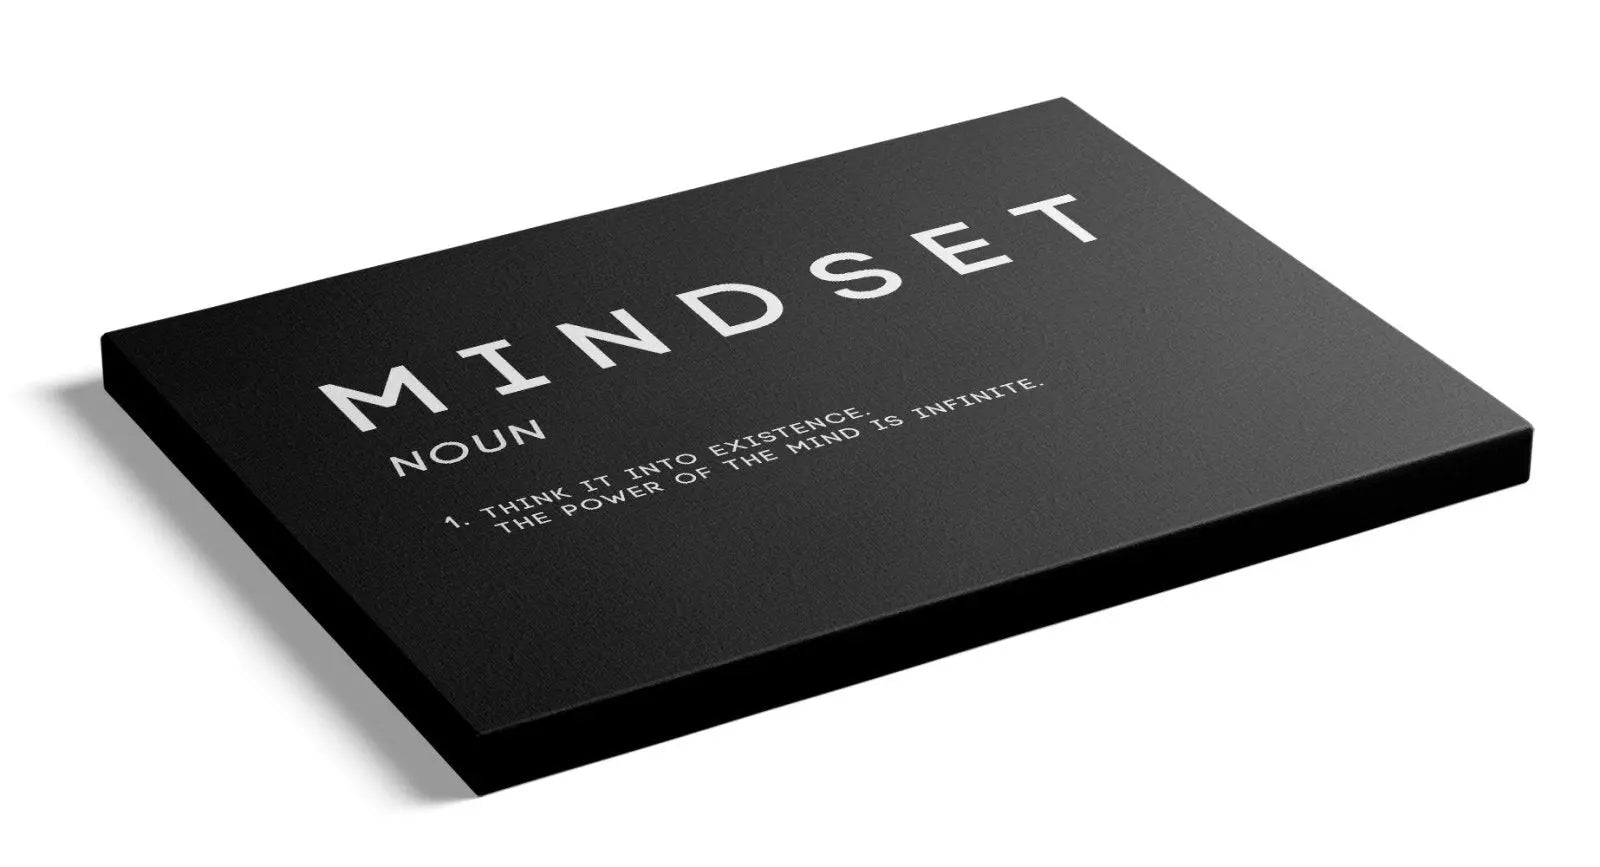 "MINDSET" - Art For Everyone